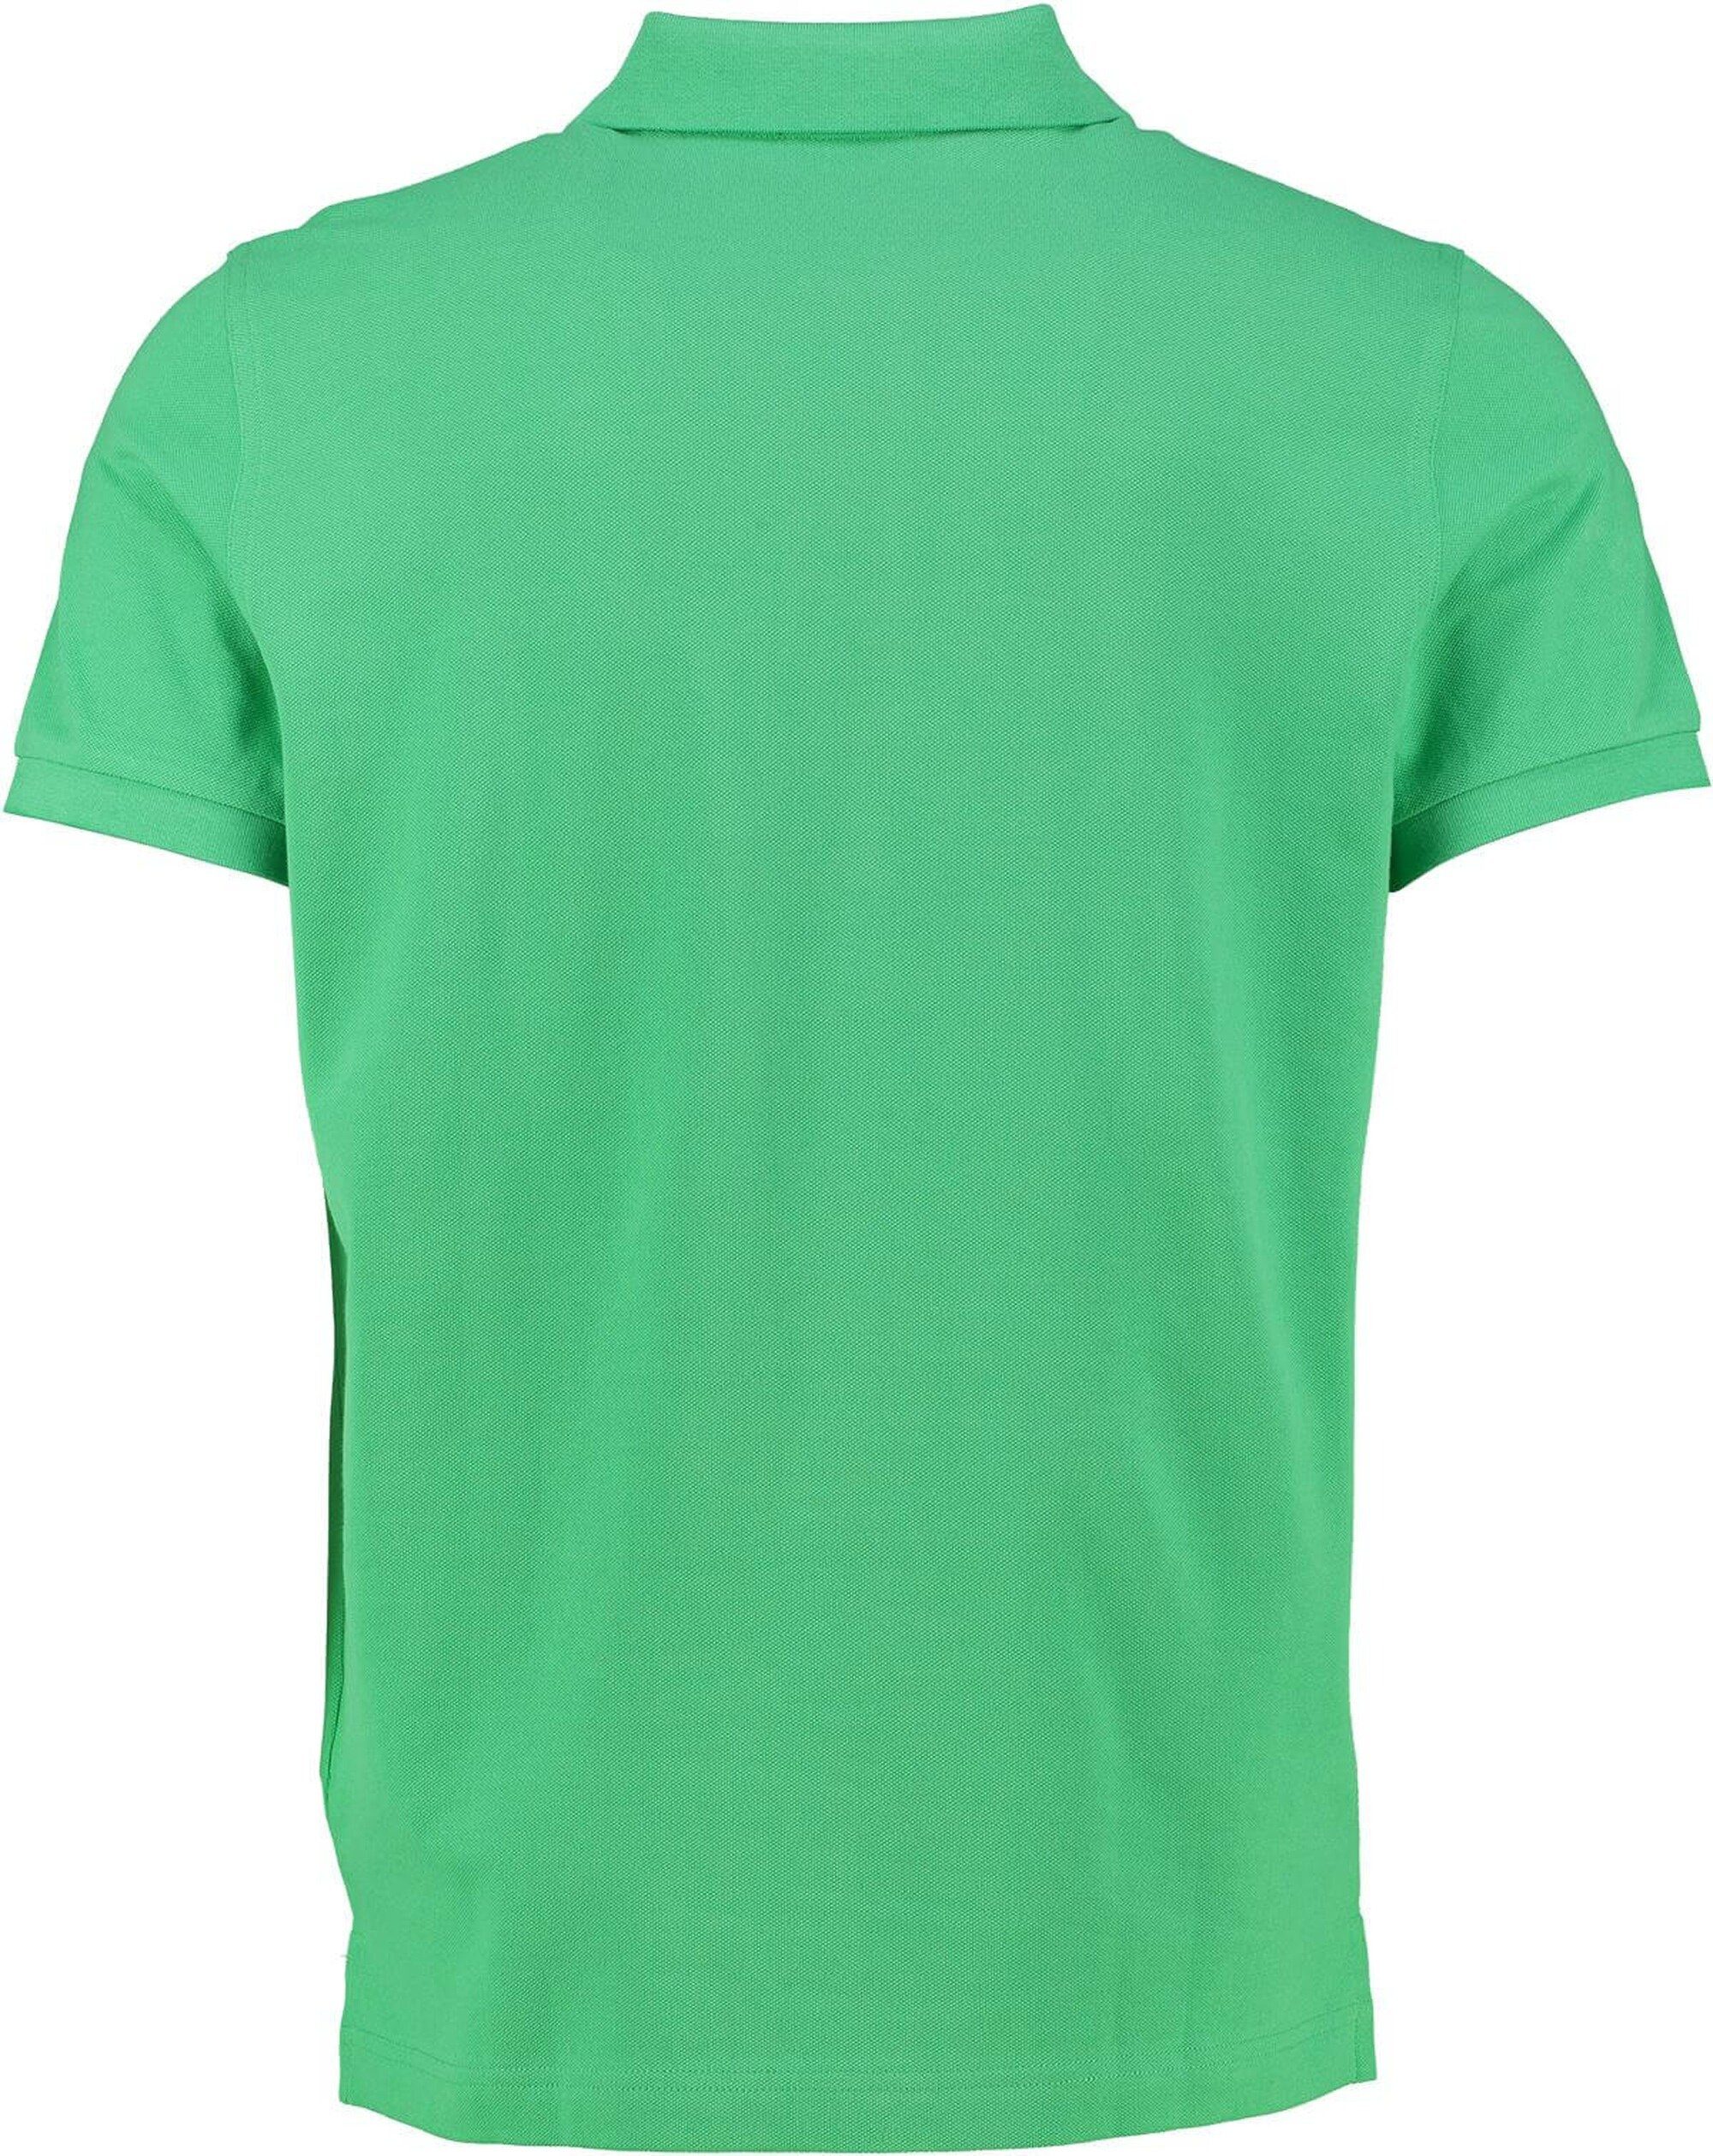 Gant Poloshirt GANT Polo-Shirt green grün mid Original Rugger